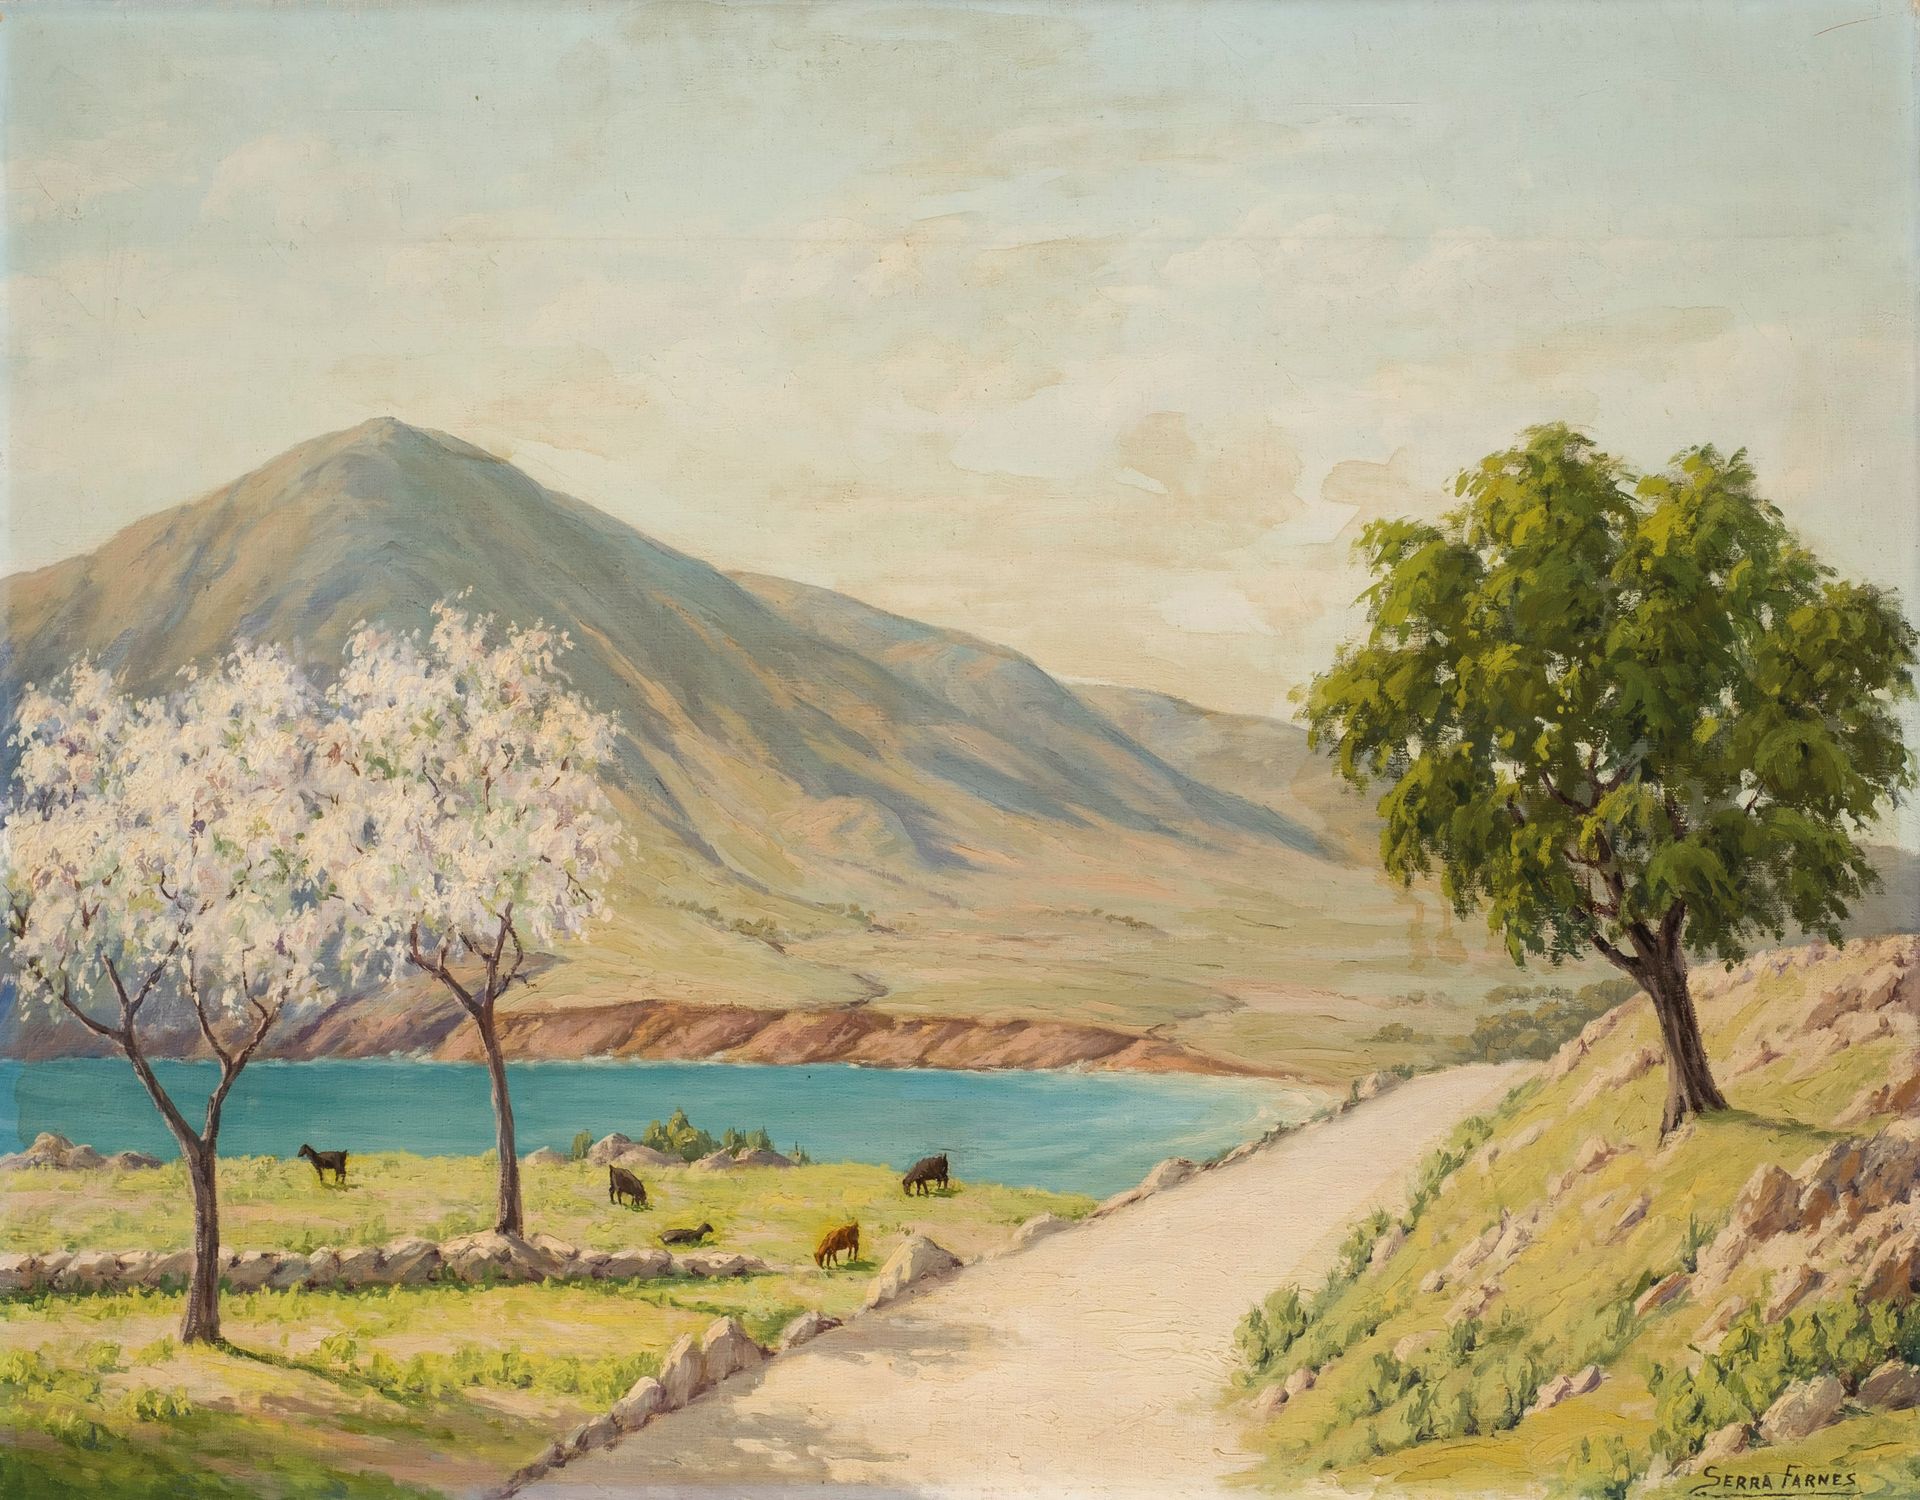 SERRA FARNES, PEDRO (1890 - 1974) 布面油画。在右下角有签名。70x90厘米